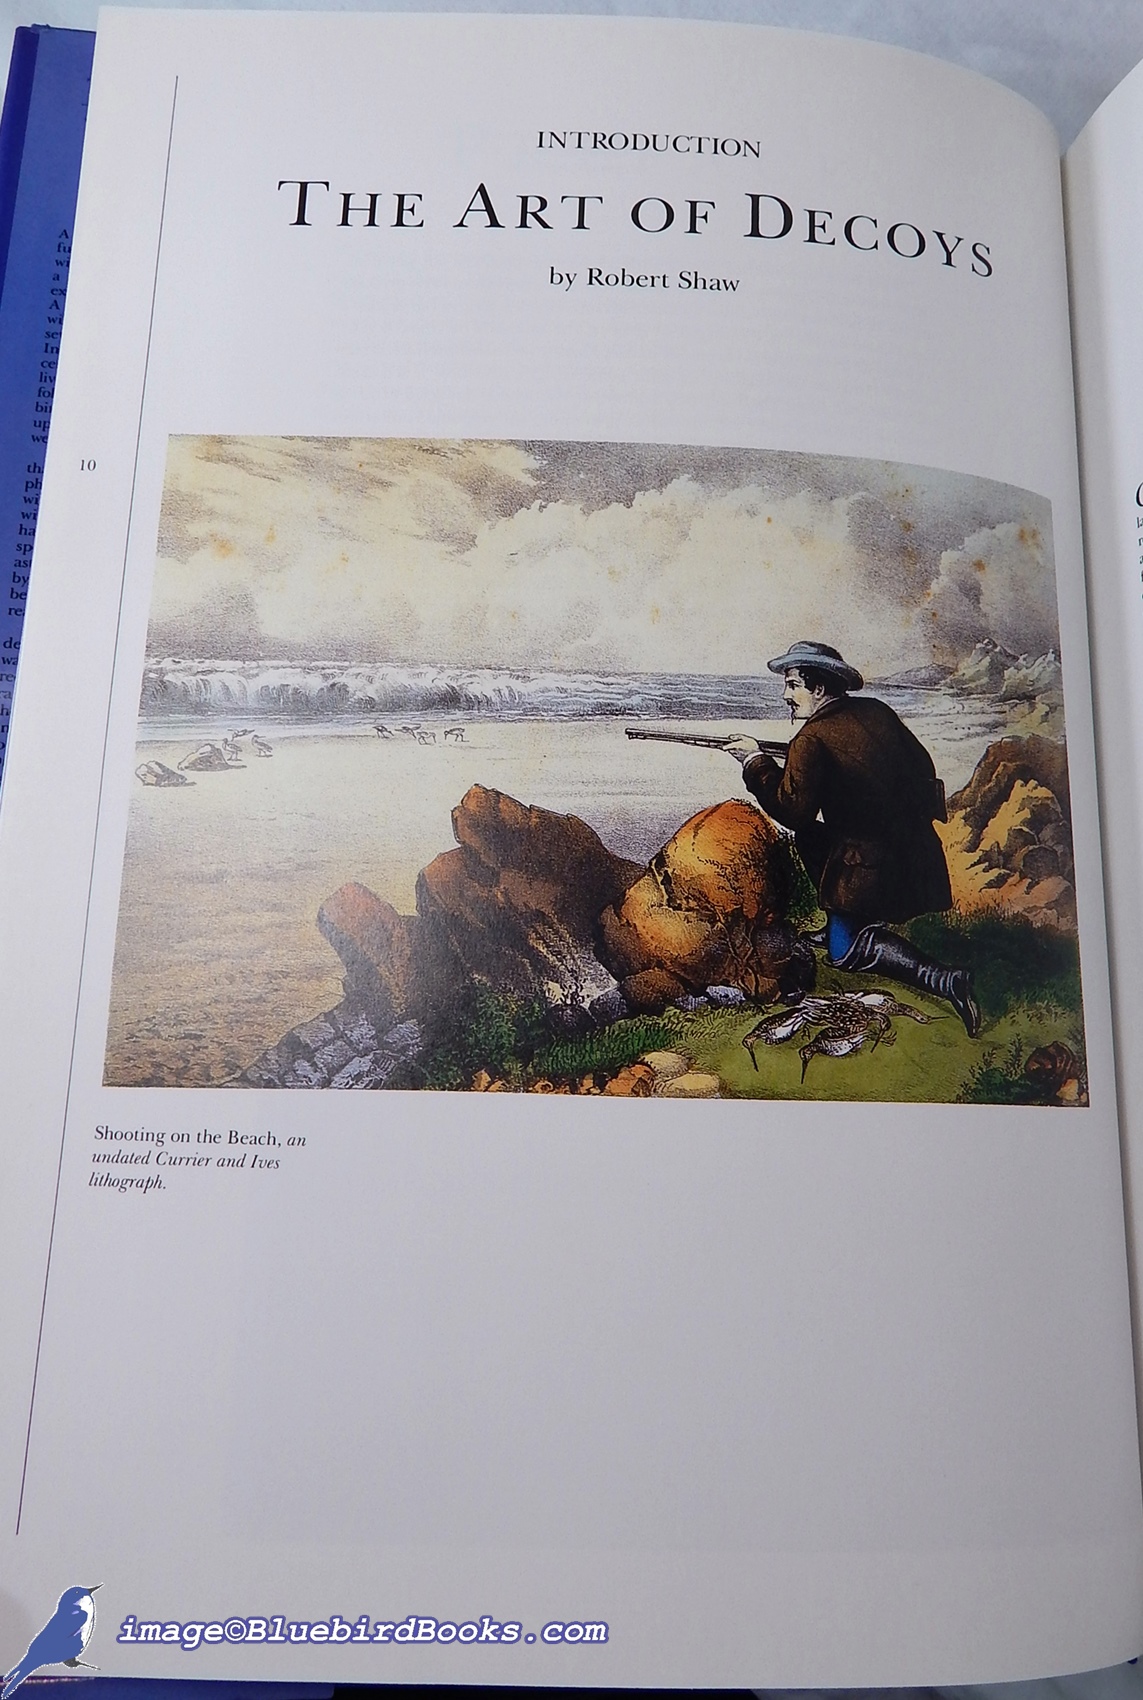 ENGERS, JOE (EDITOR); BUCKNER, BILL (PHOTOGRAPHY) - The Great Book of Wildfowl Decoys